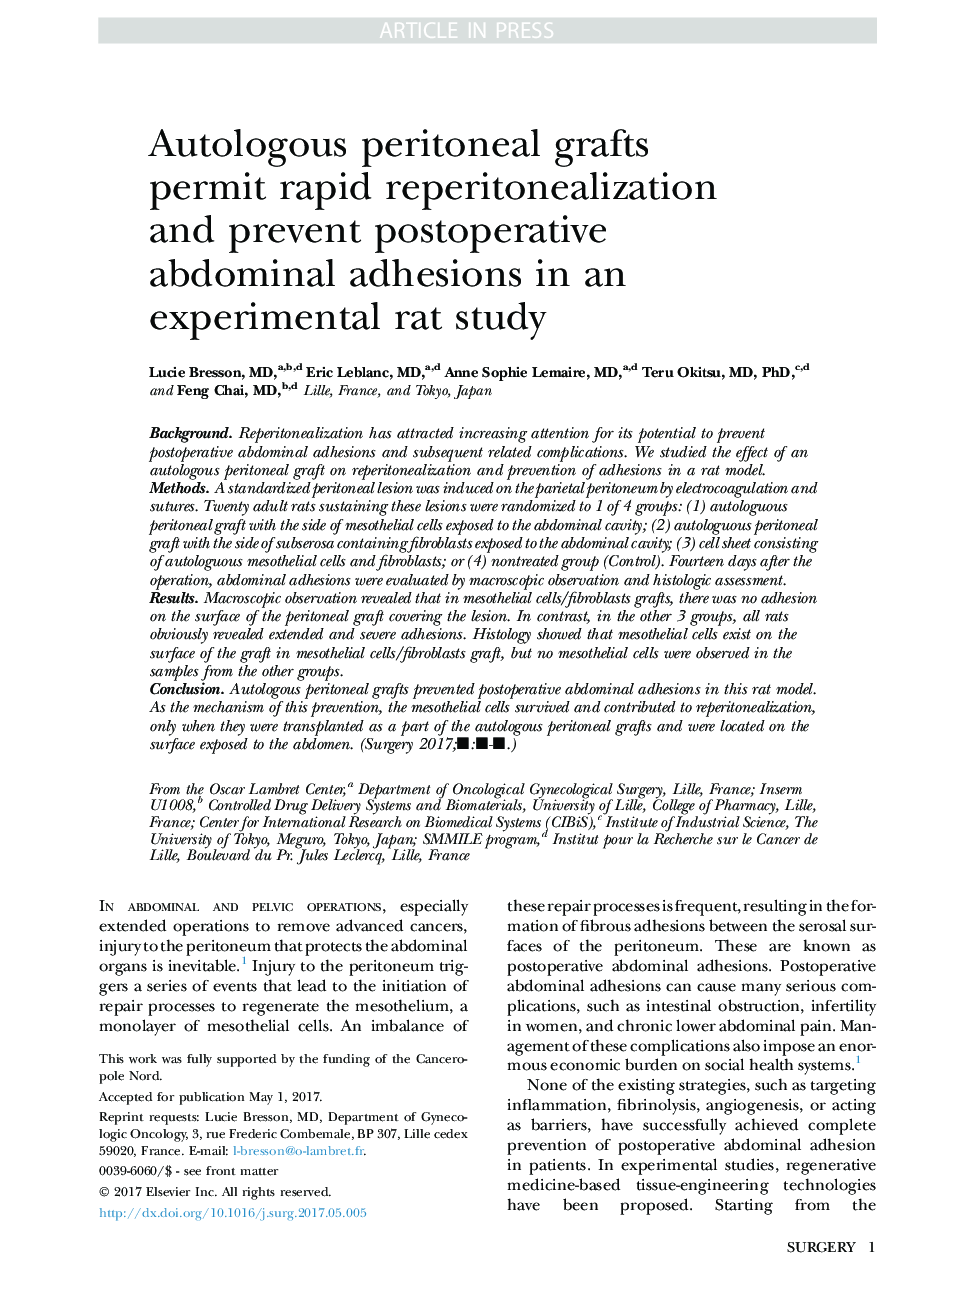 Autologous peritoneal grafts permit rapid reperitonealization and prevent postoperative abdominal adhesions in an experimental rat study